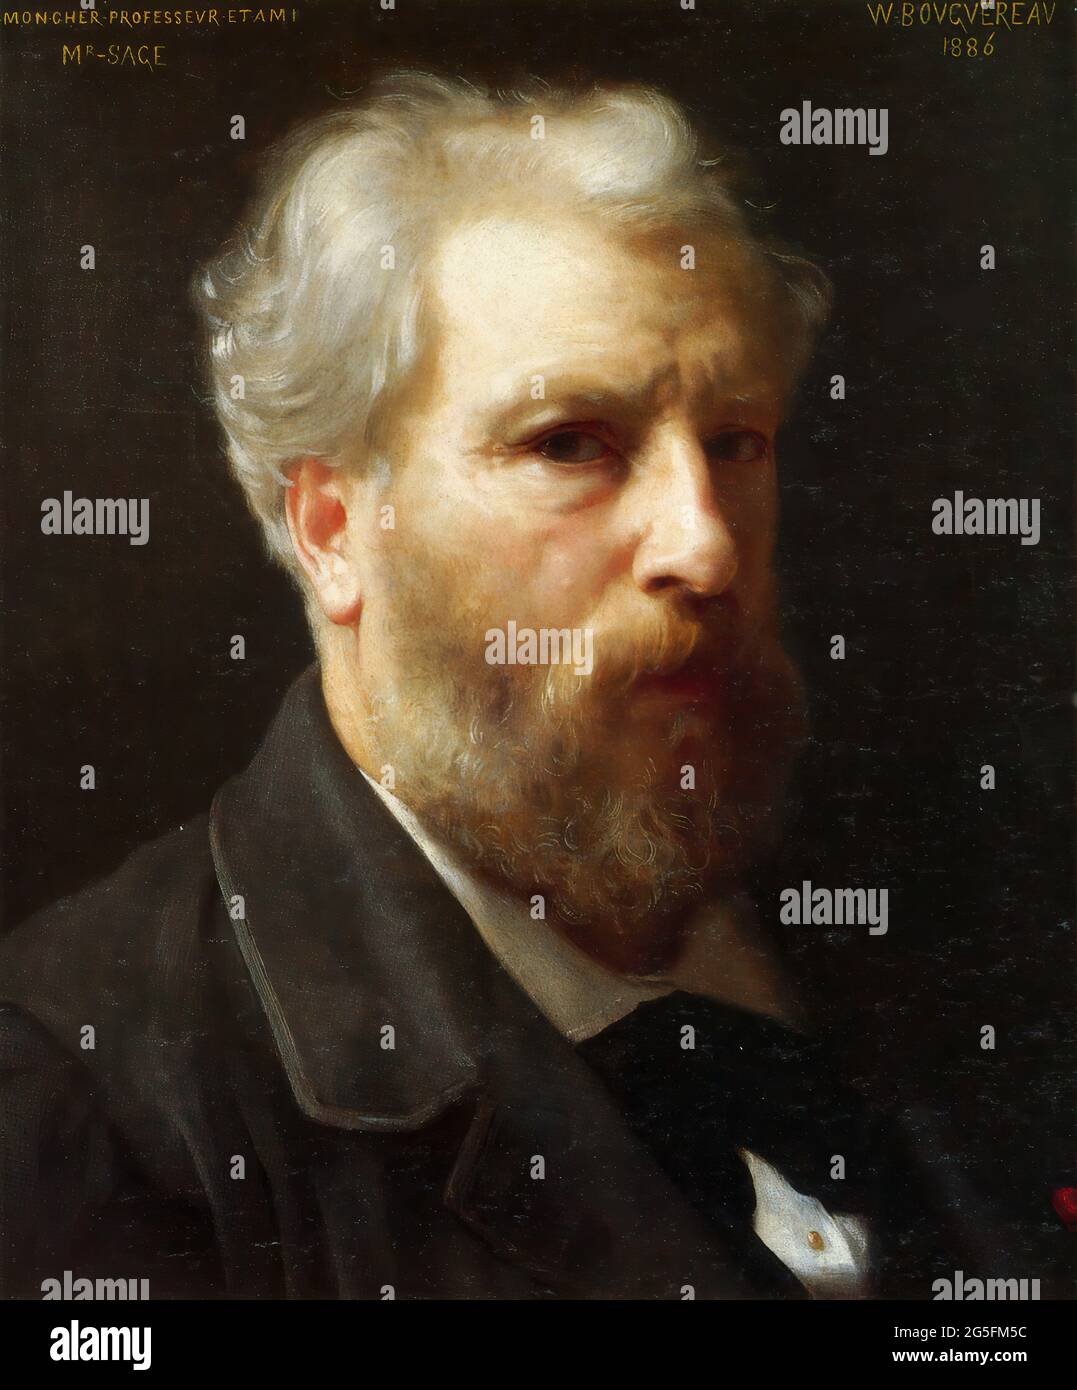 William-Adolphe Bouguereau (1825-1905) - Self Portrait Presented to Mr Sage  1886 Stock Photo - Alamy